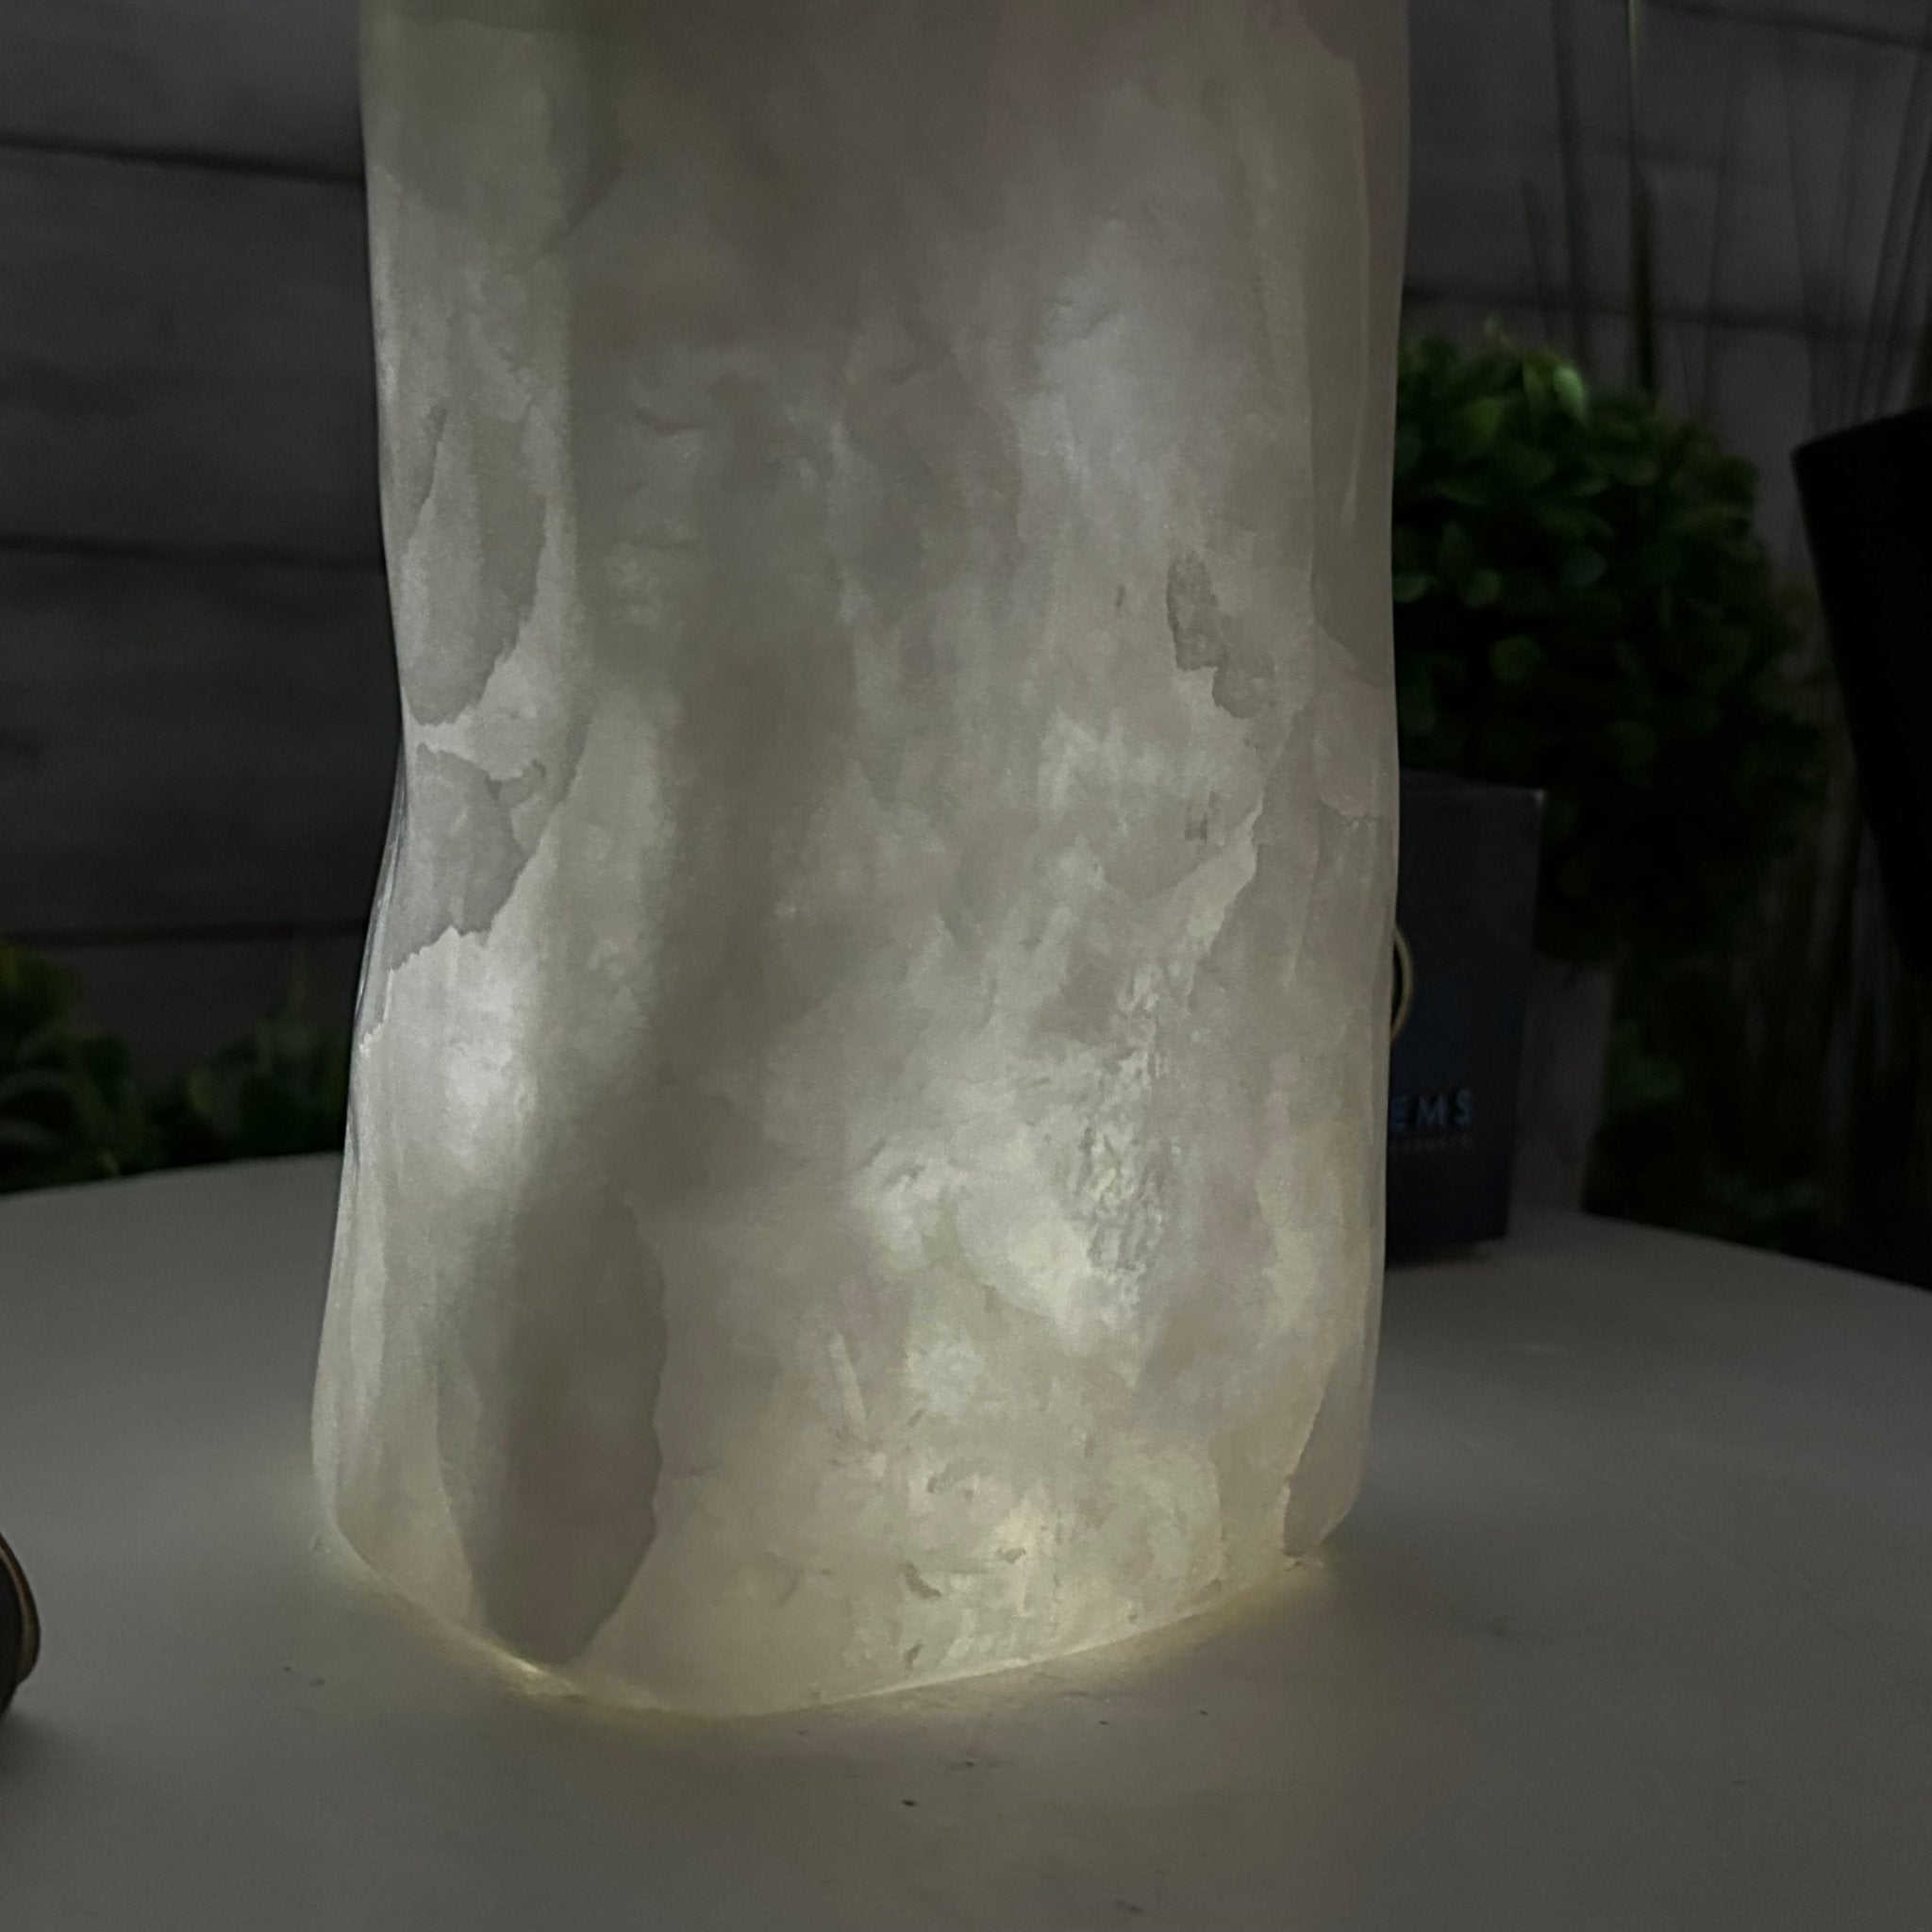 Polished Milky Quartz Crystal Night Light, 7.2 lbs & 8.6" Tall #5801MQ-002 - Brazil GemsBrazil GemsPolished Milky Quartz Crystal Night Light, 7.2 lbs & 8.6" Tall #5801MQ-002Night Lights5801MQ-002